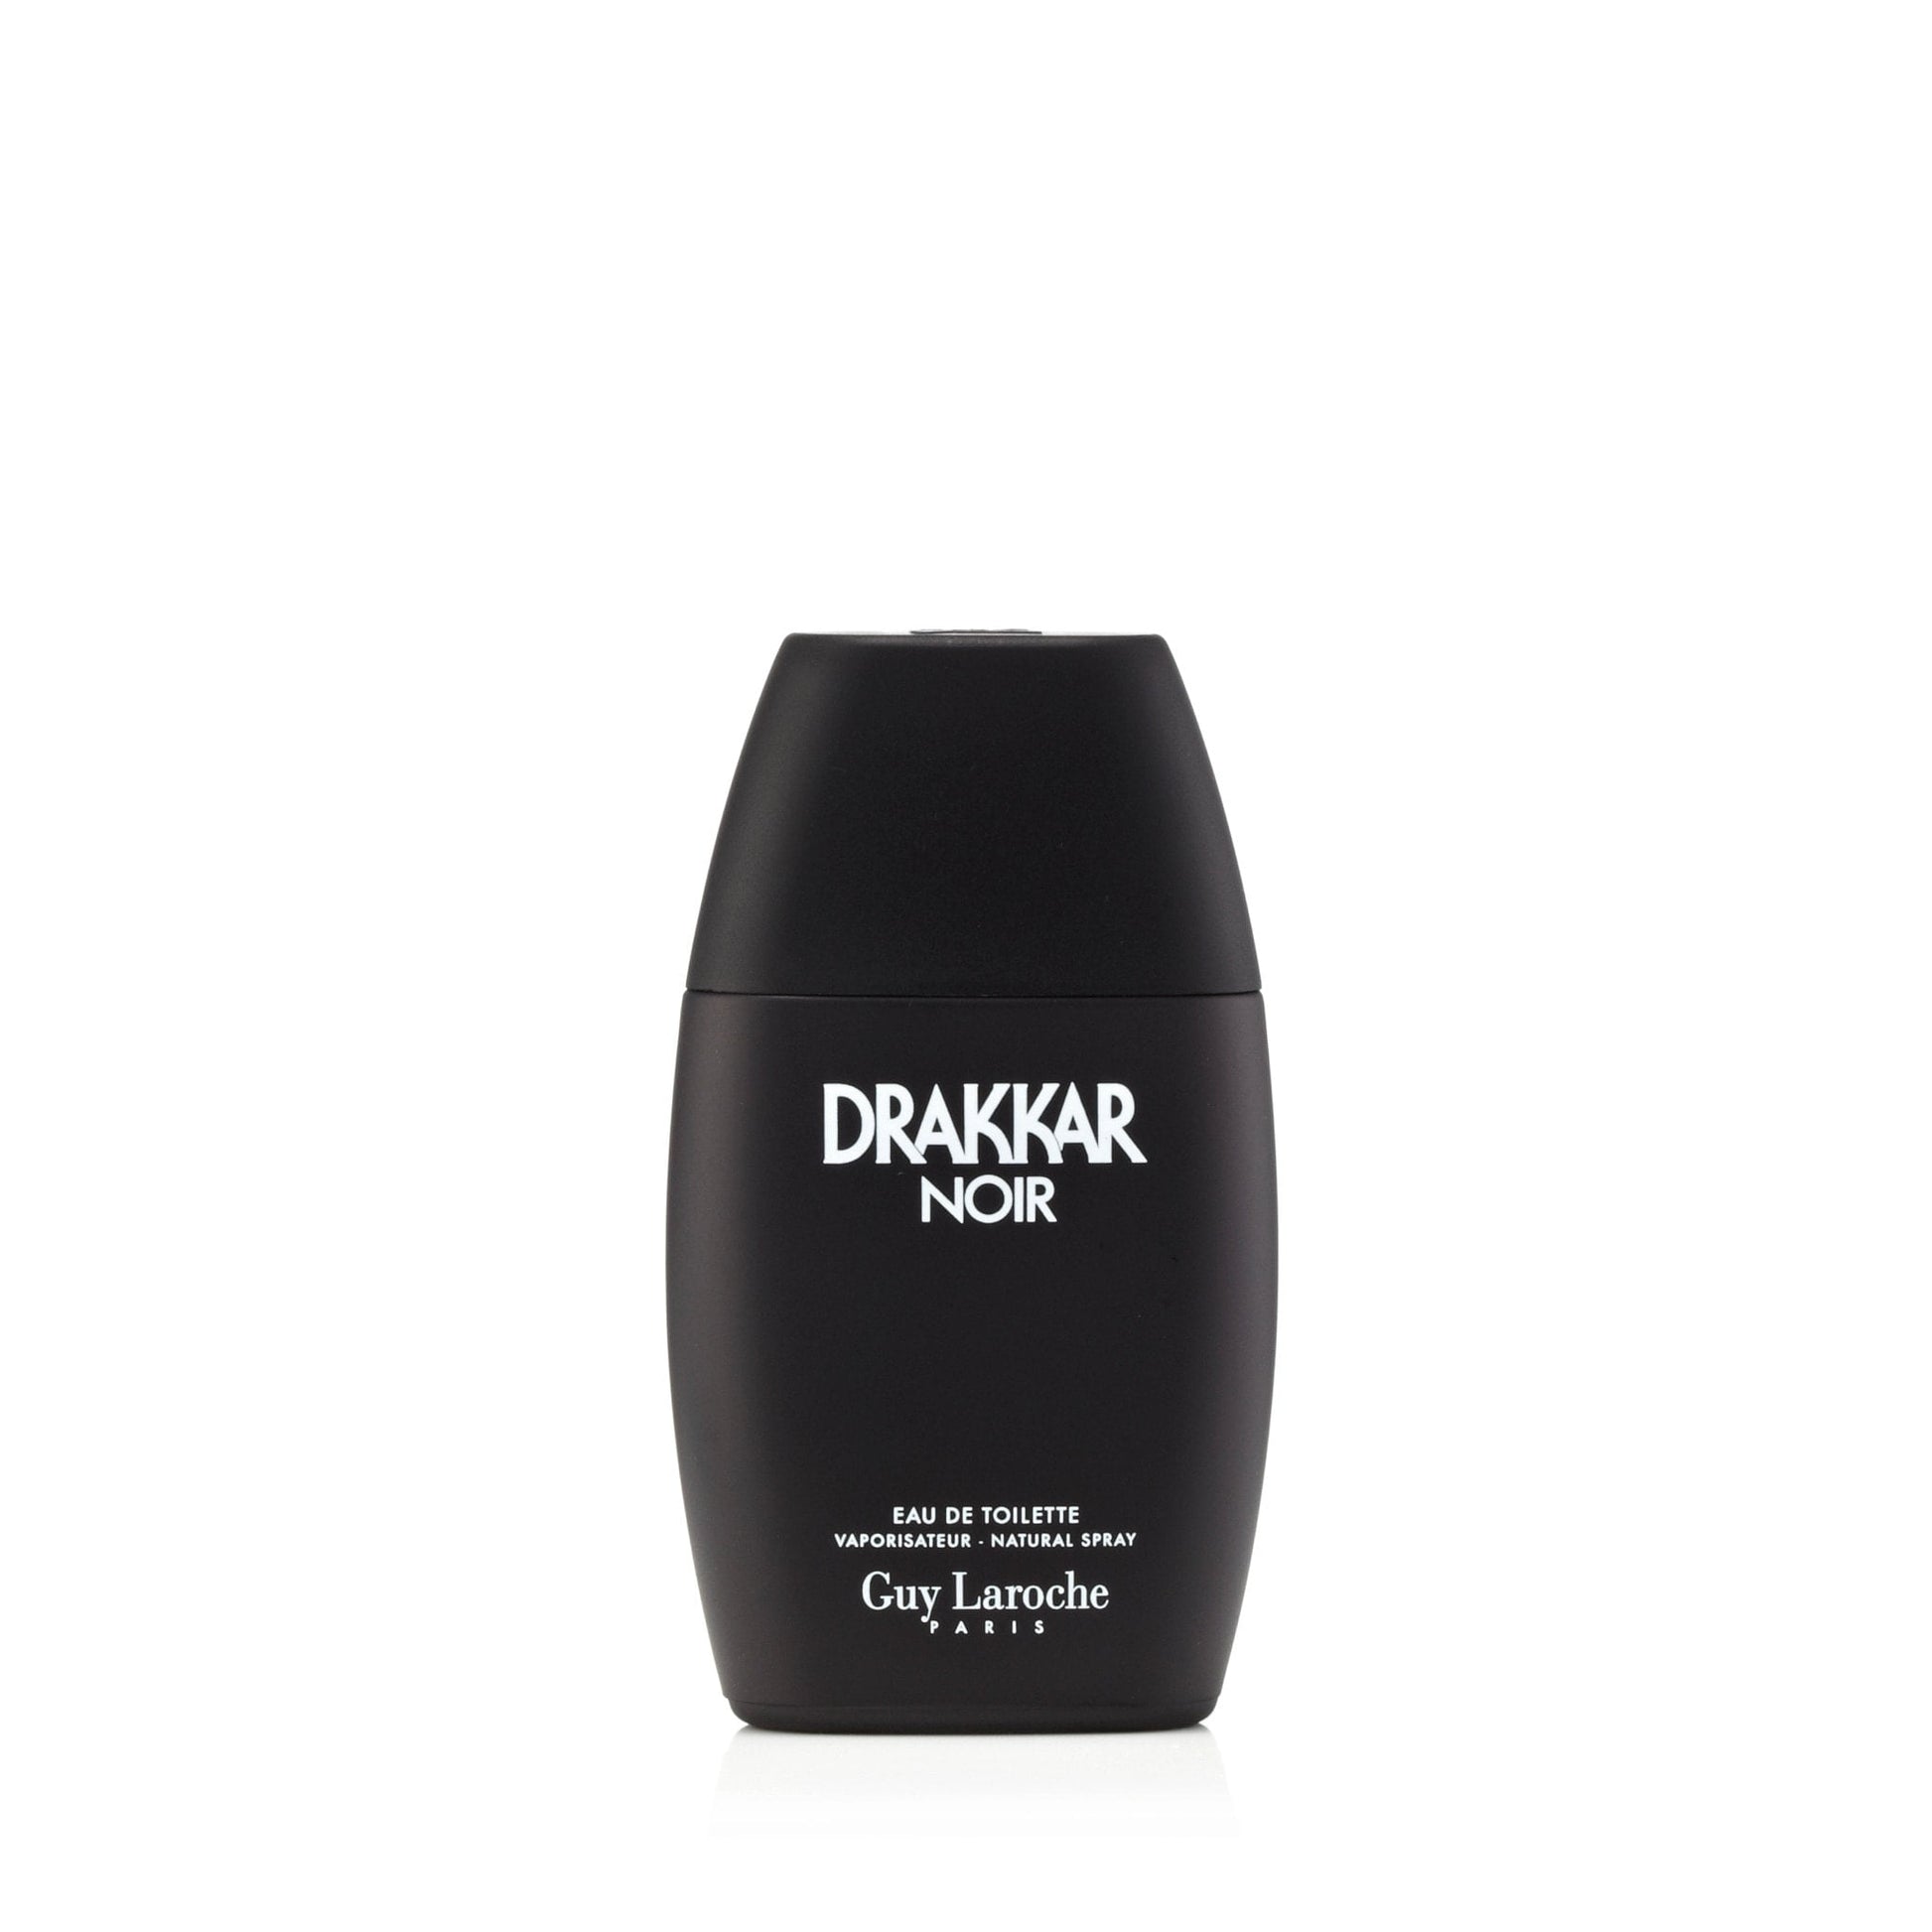 Drakkar Noir Eau de Toilette Spray for Men by Guy Laroche, Product image 3